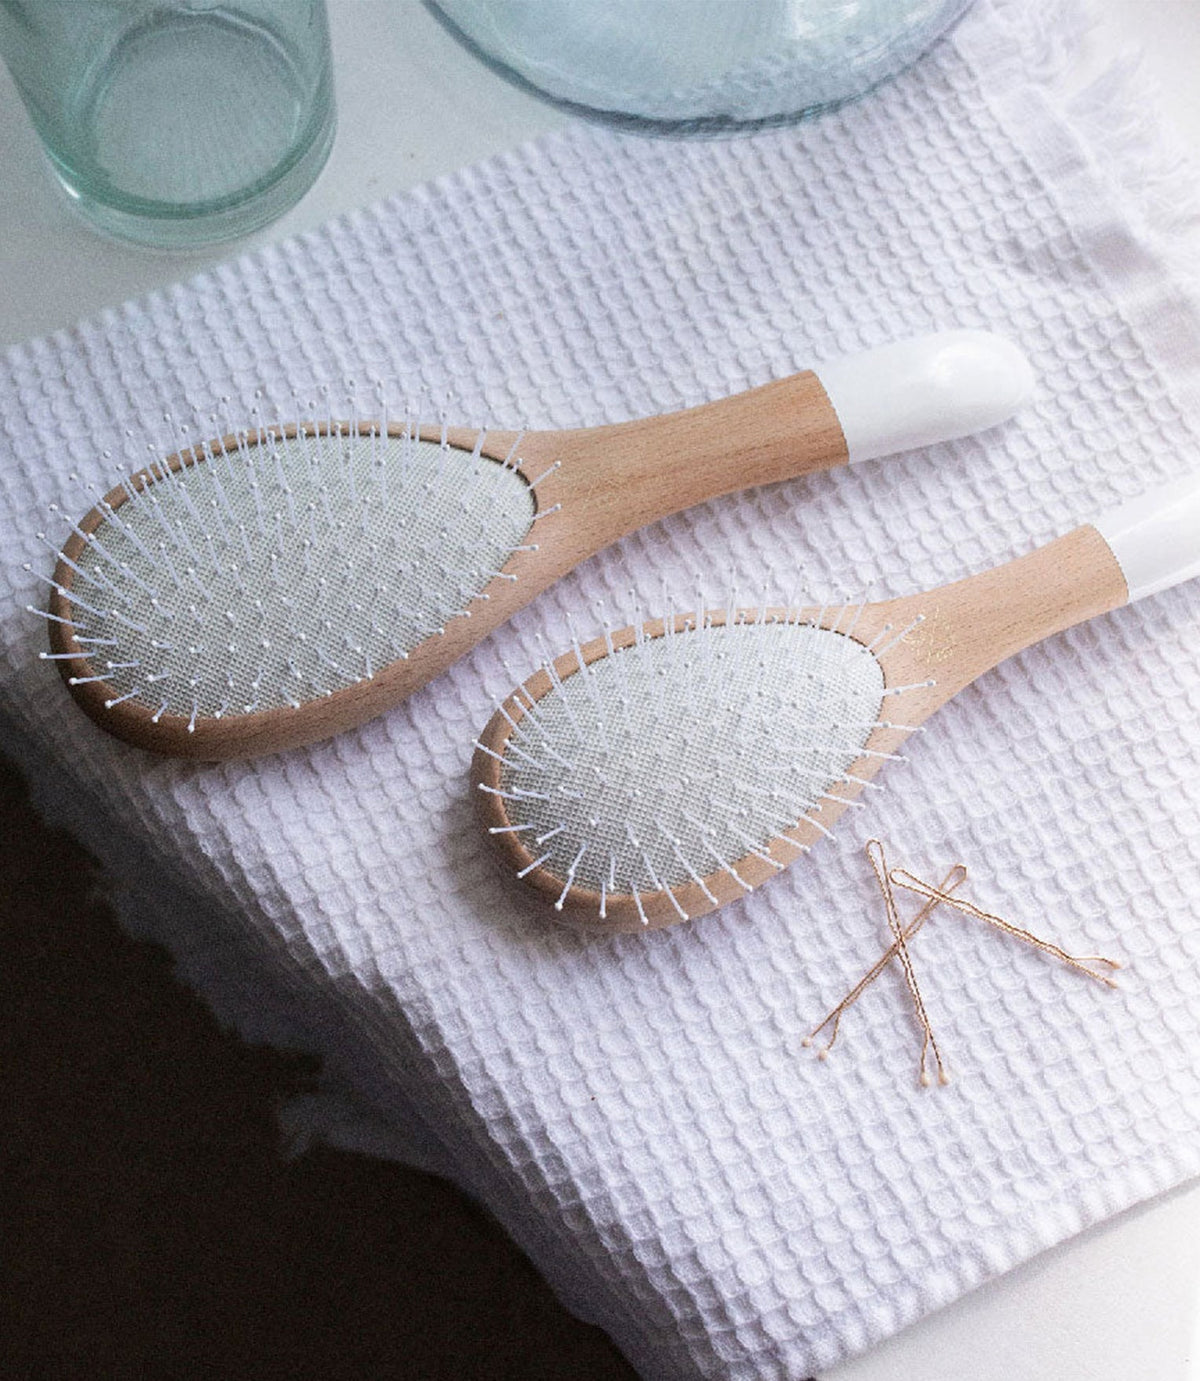 020 Small Wooden Detangling Hair Brush with Nylon bristles